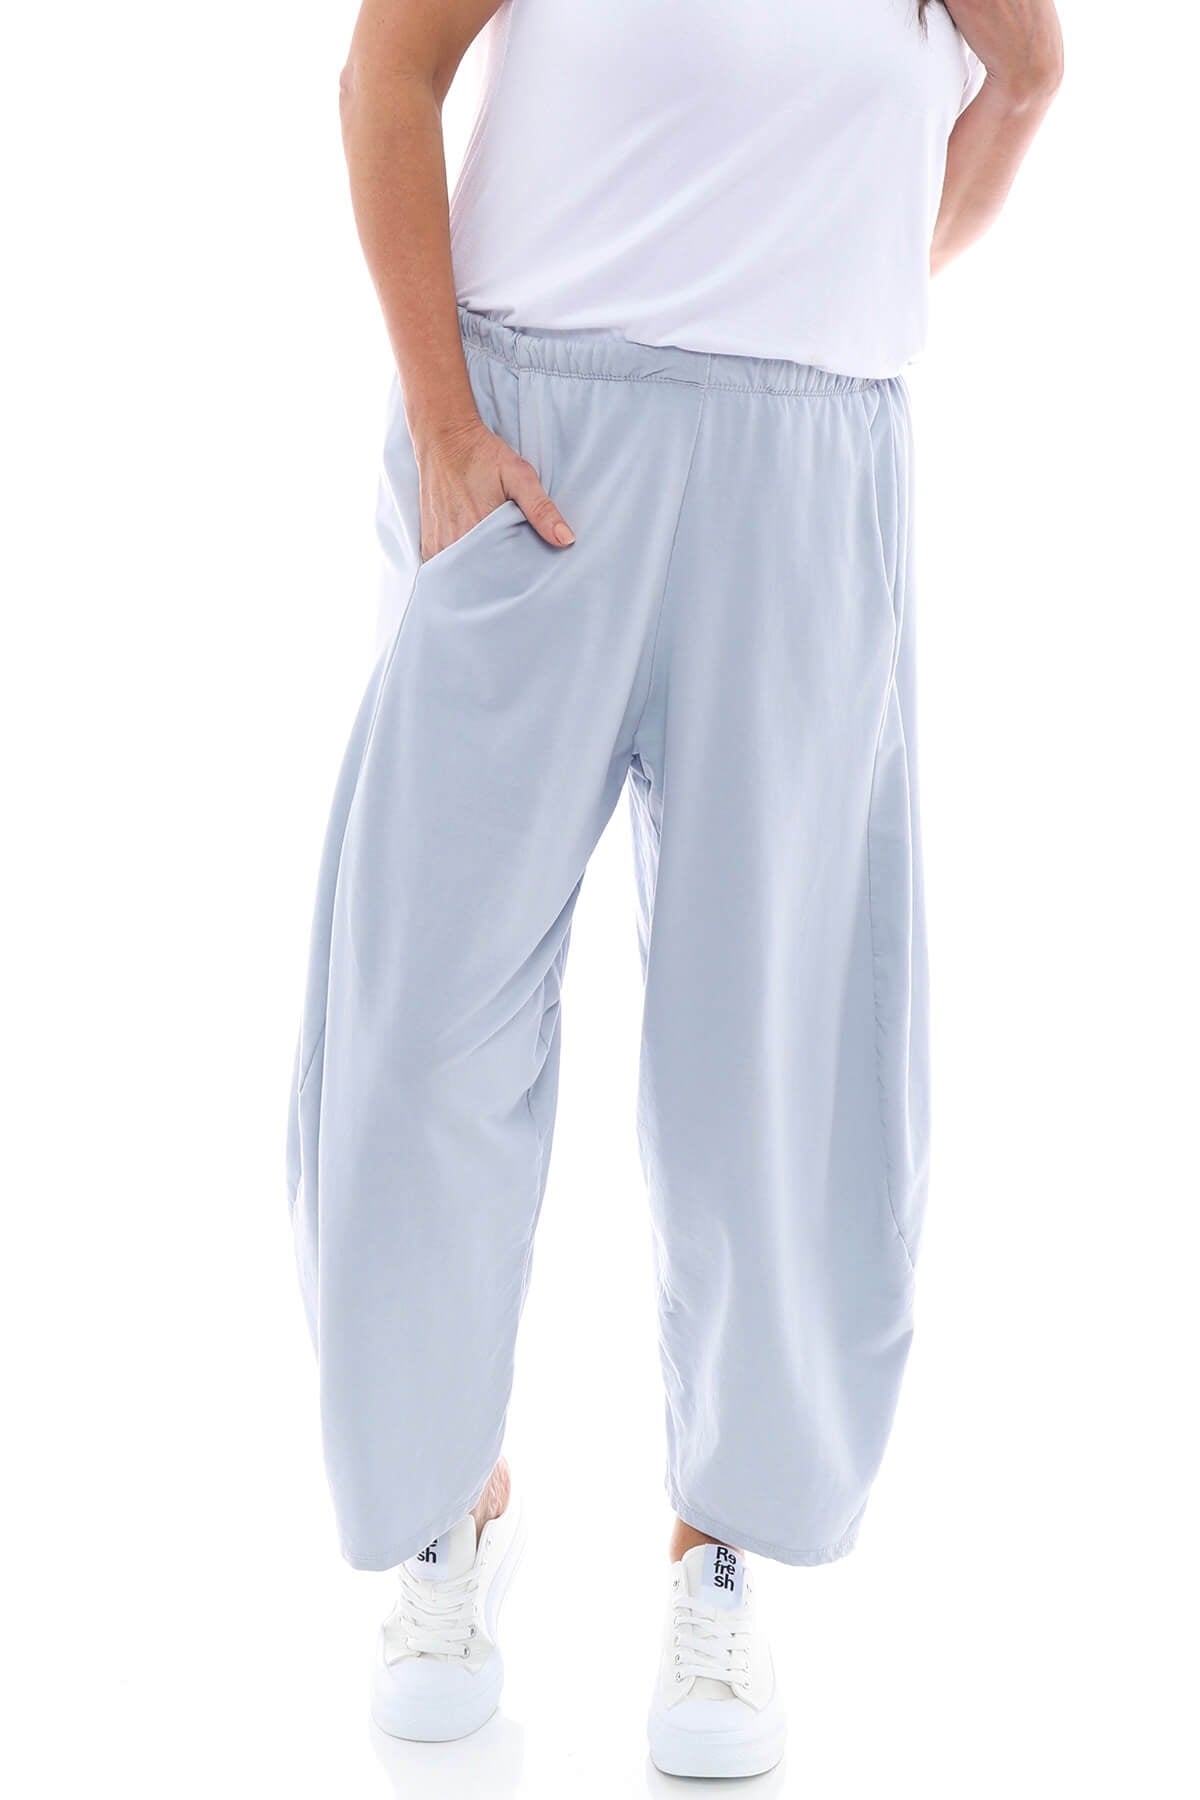 Kensley Cotton Pants Grey